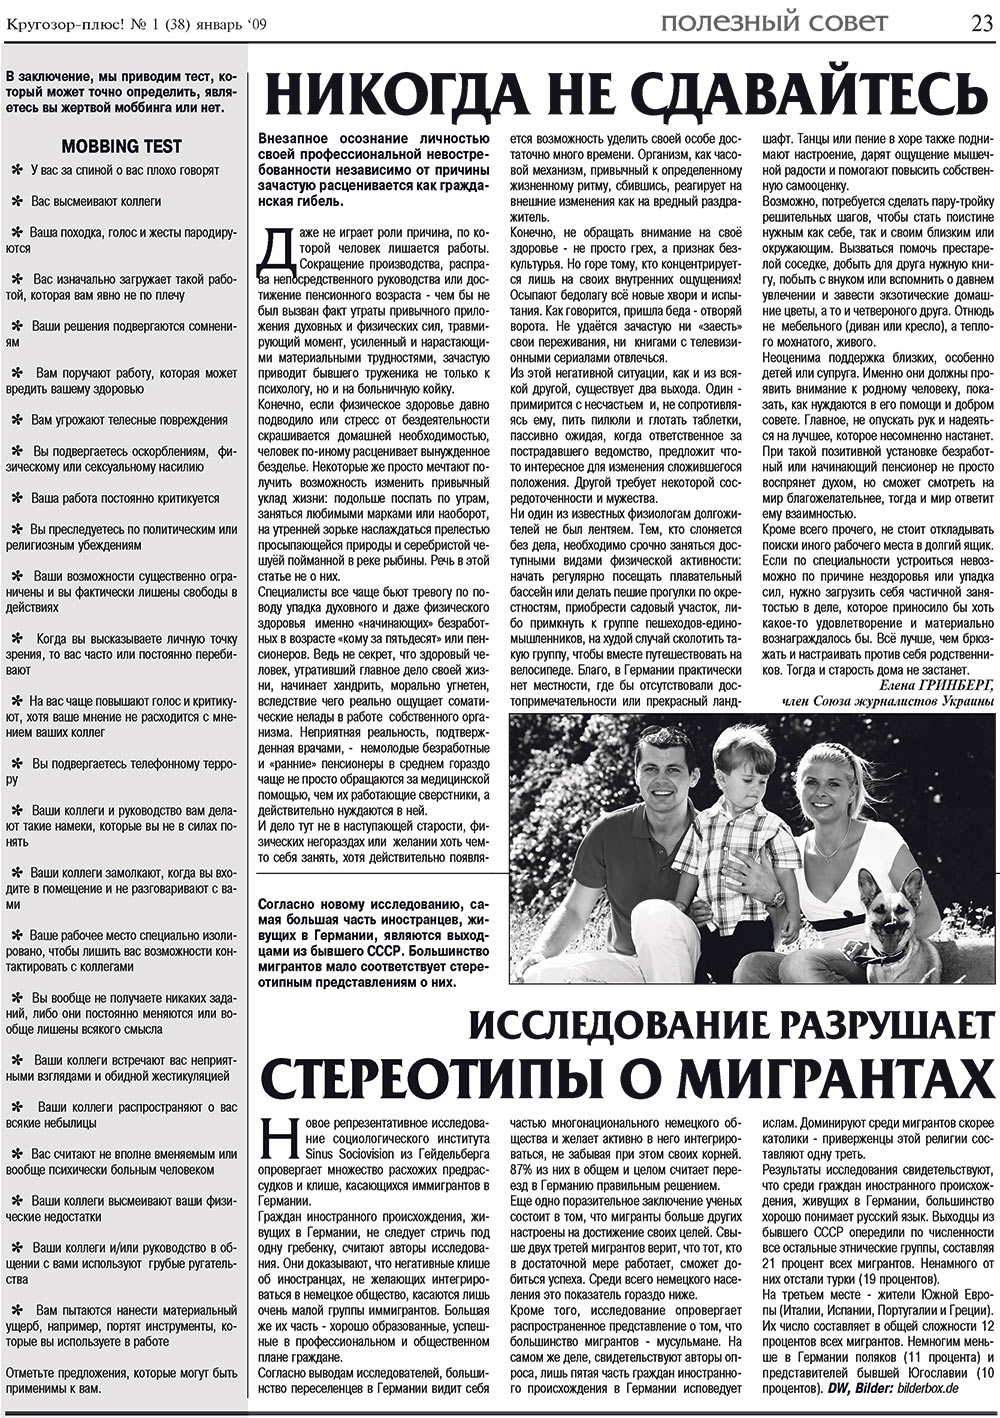 Кругозор плюс! (газета). 2009 год, номер 1, стр. 23